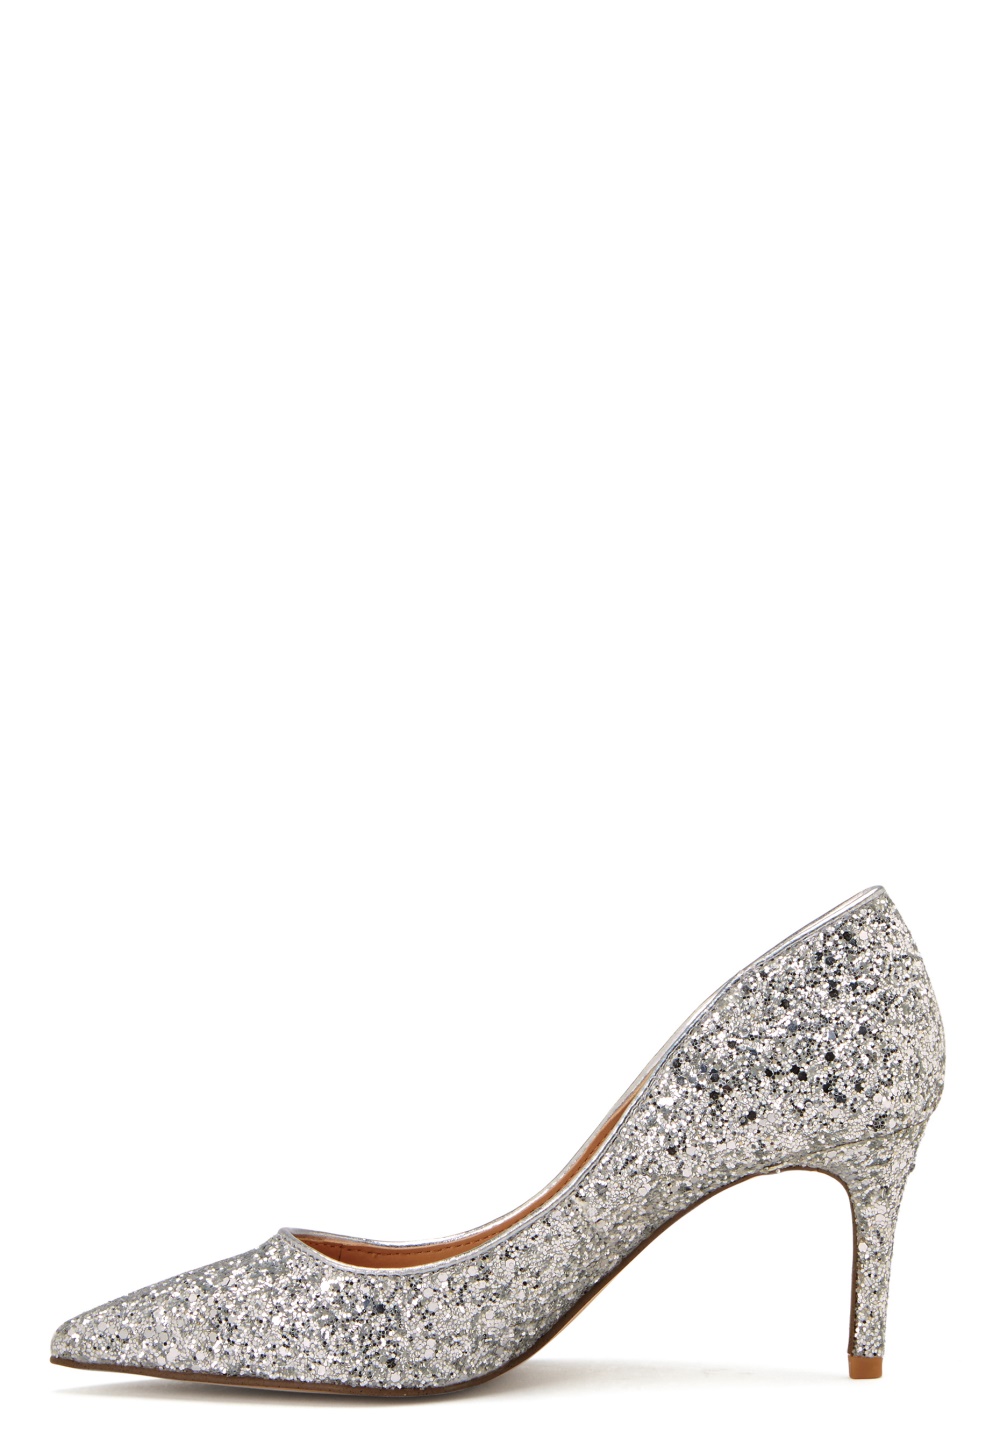 steve madden silver sparkly heels